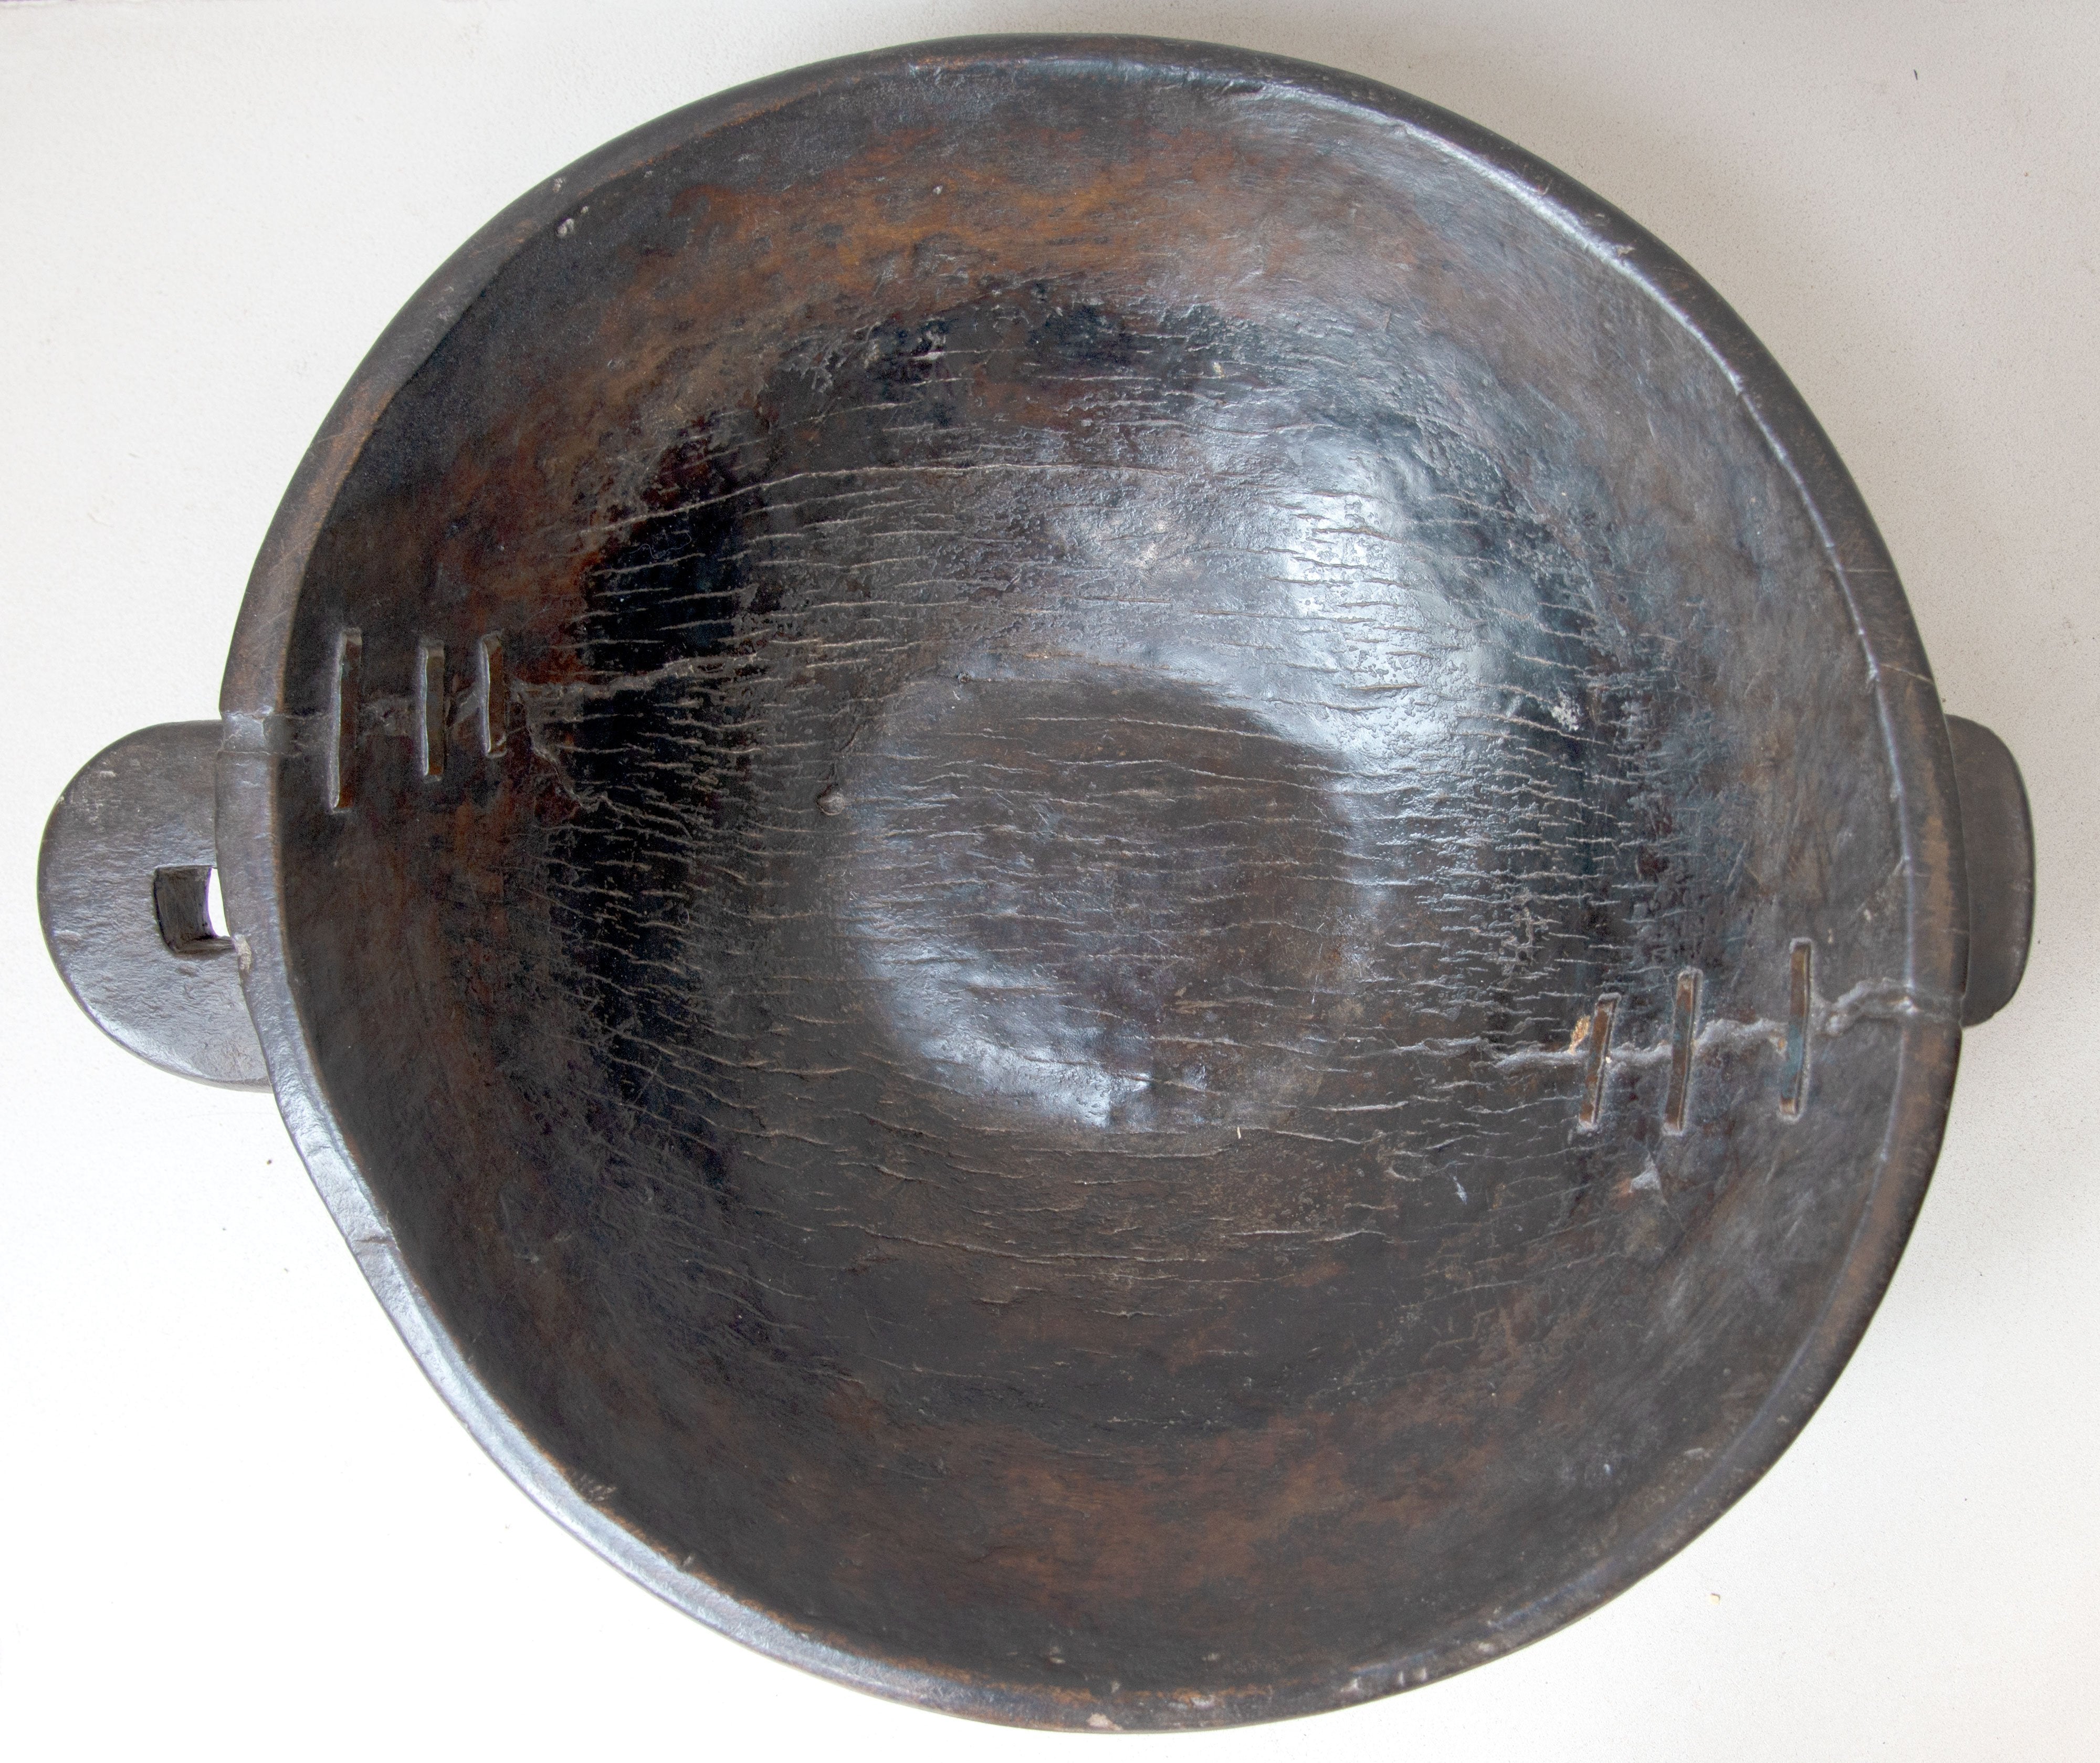 Ethiopian Bowl